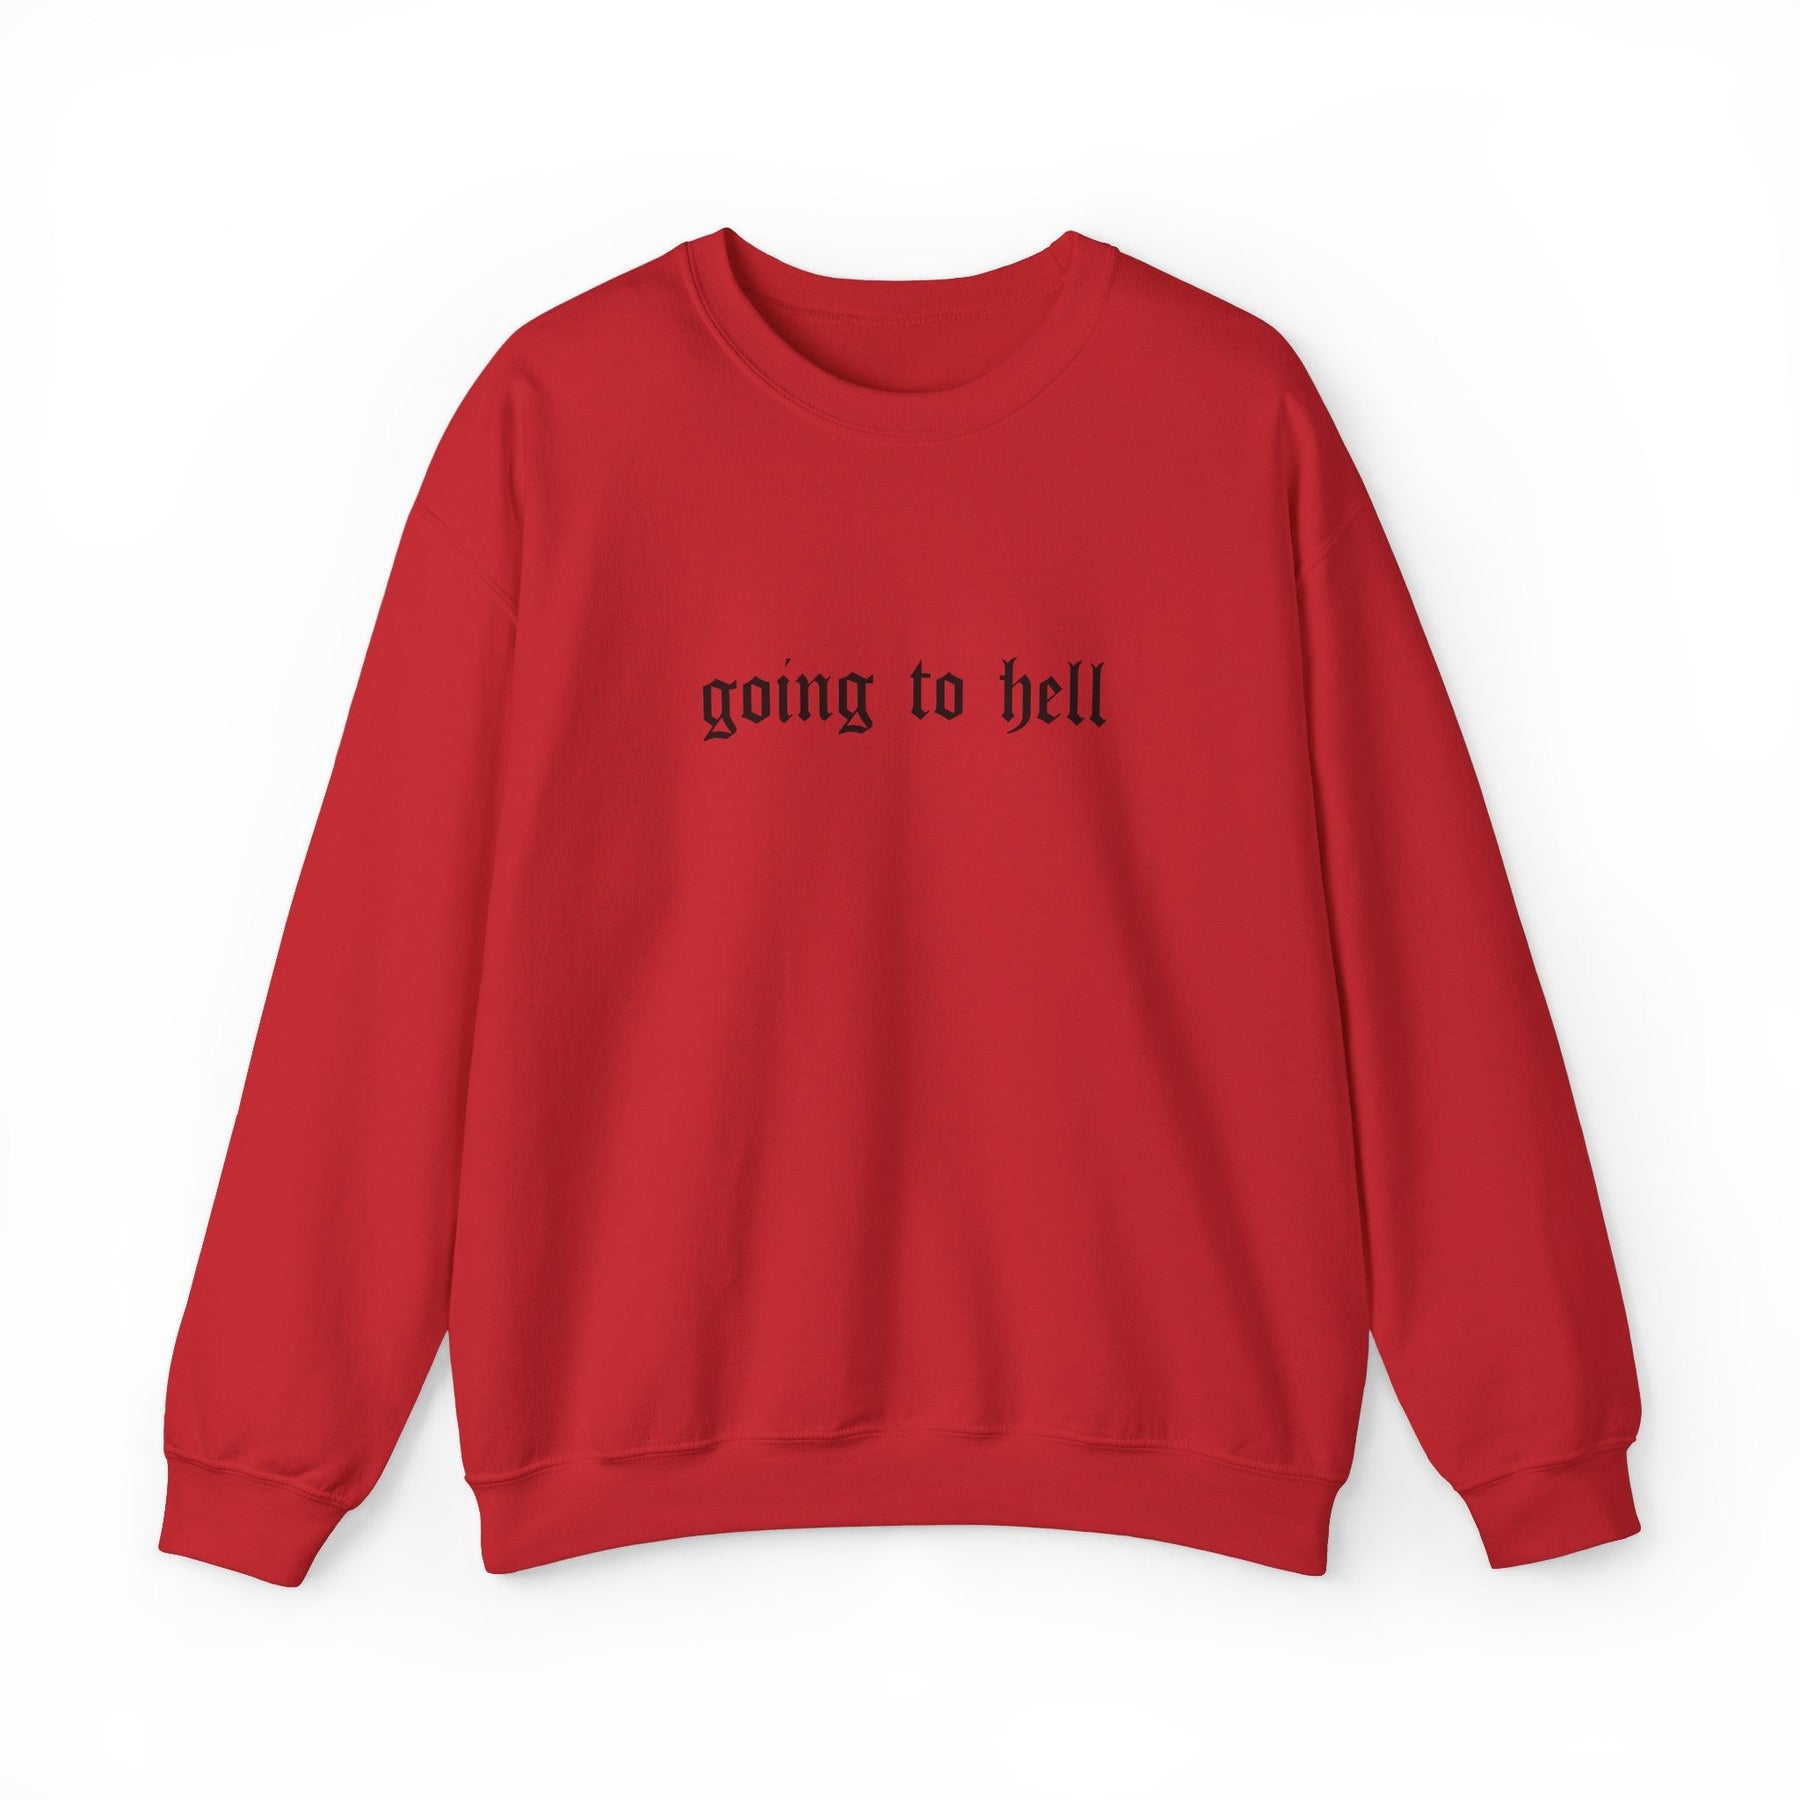 Going to Hell Crewneck Sweatshirt - Goth Cloth Co.Sweatshirt58326447705128447457